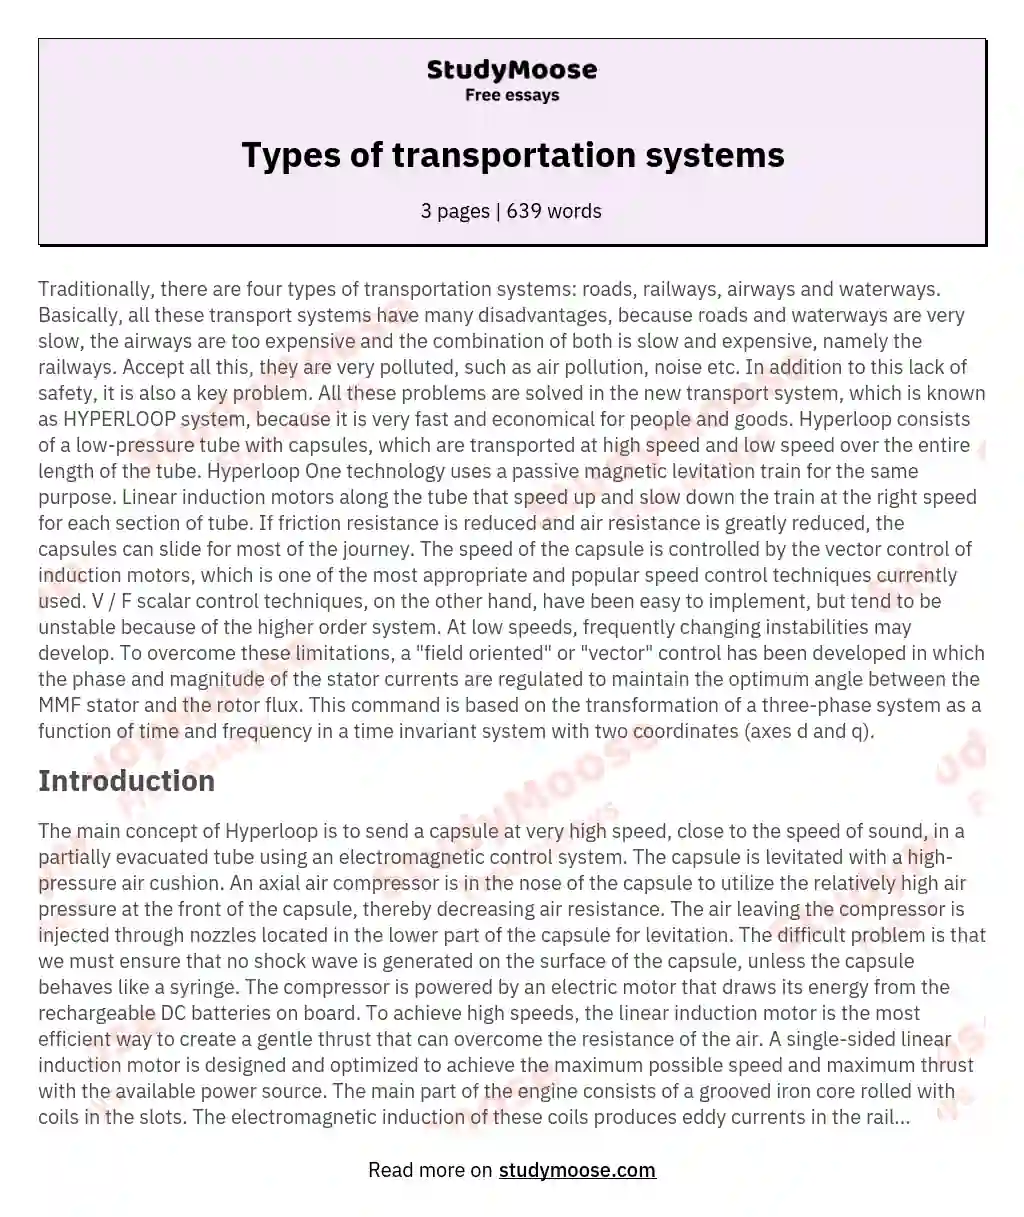 Types of transportation systems essay